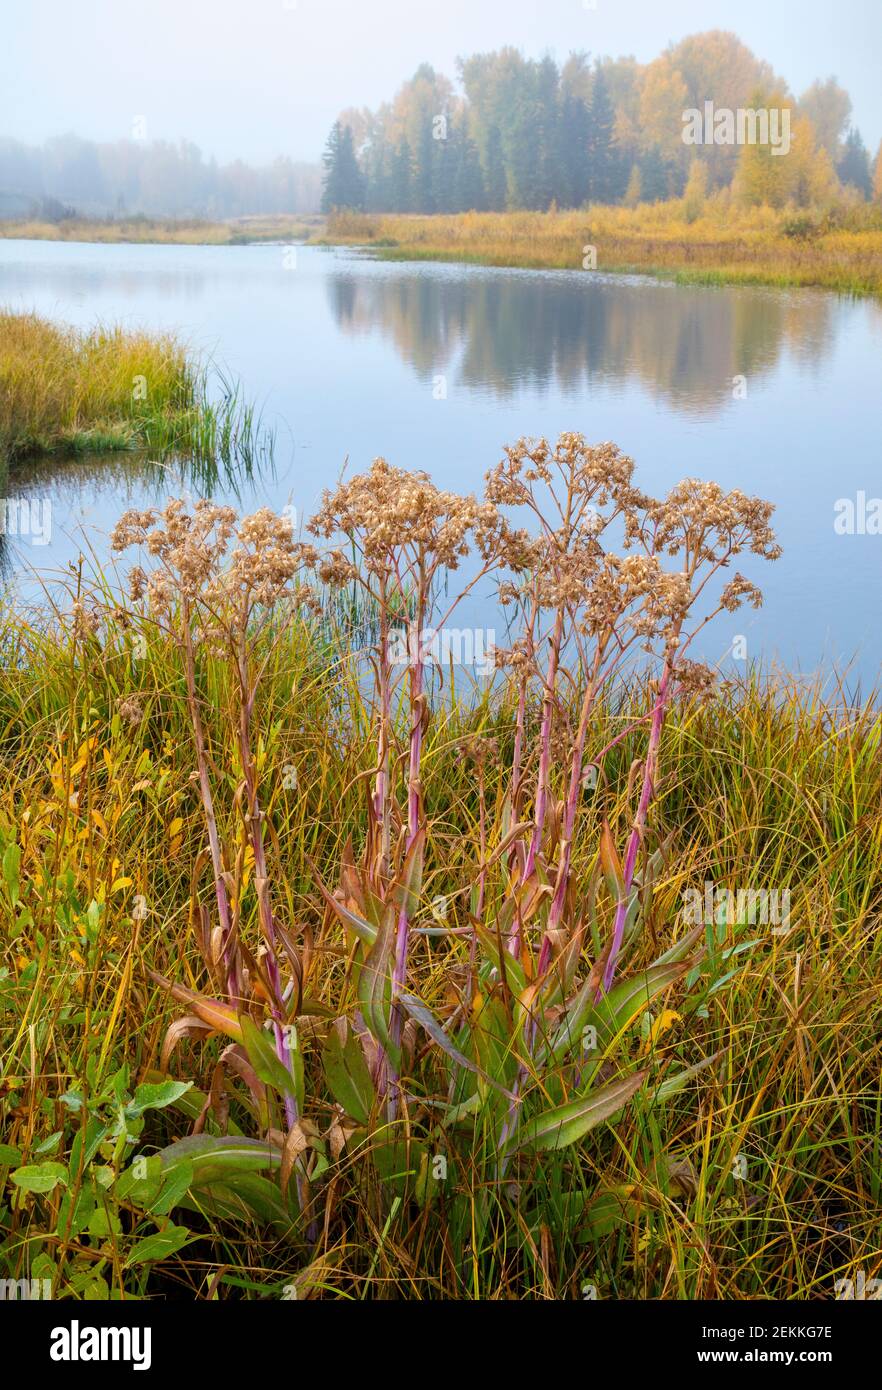 Grand Teton National Park, WY: Hoary Cress (Lepidium draba) on the bank of the Snake River in fall Stock Photo